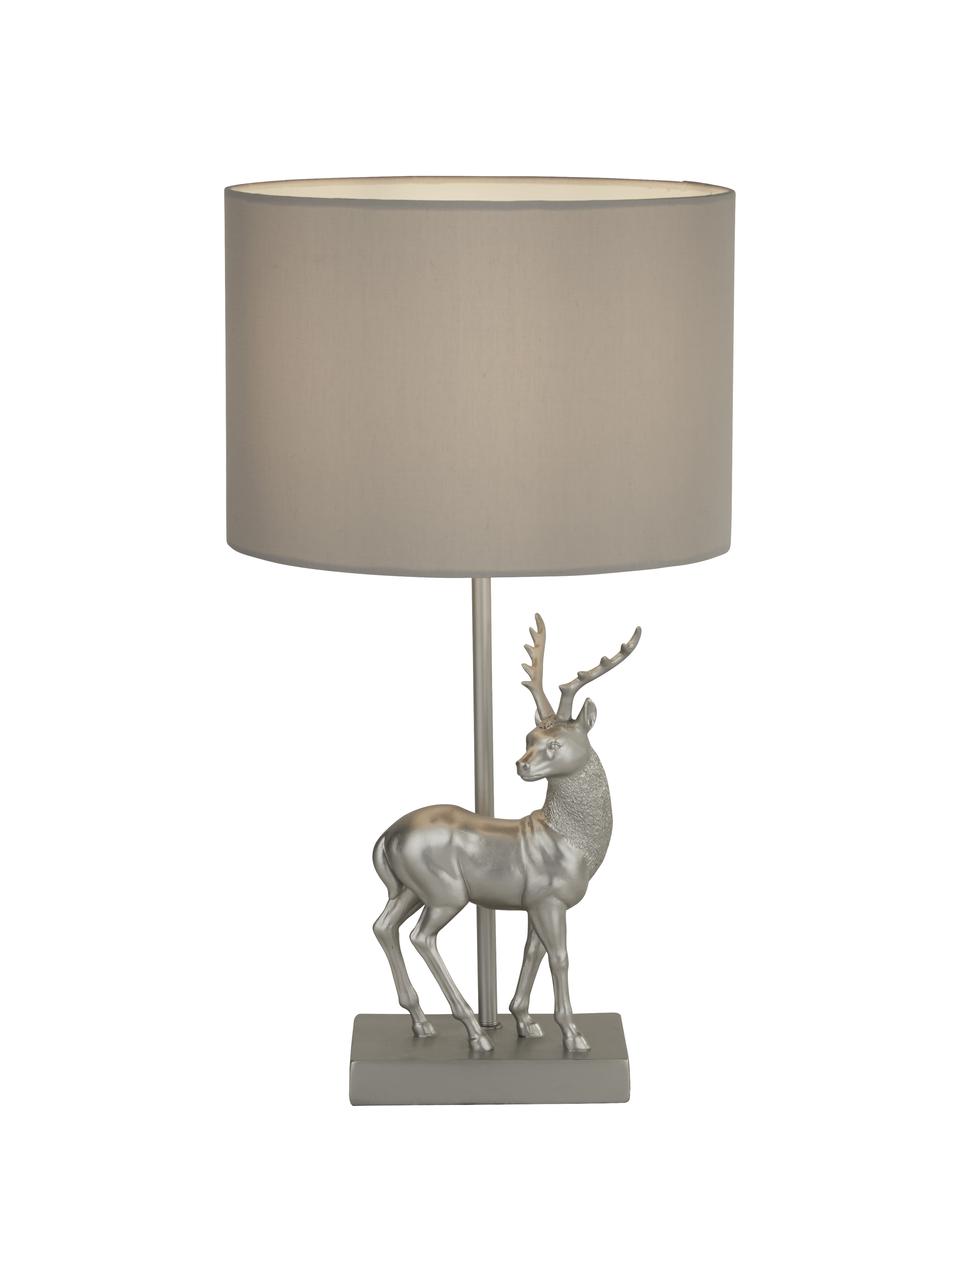 Lámpara de mesa de diseño Stag, Pantalla: tela, Gris, plateado, Ø 24 x Al 43 cm